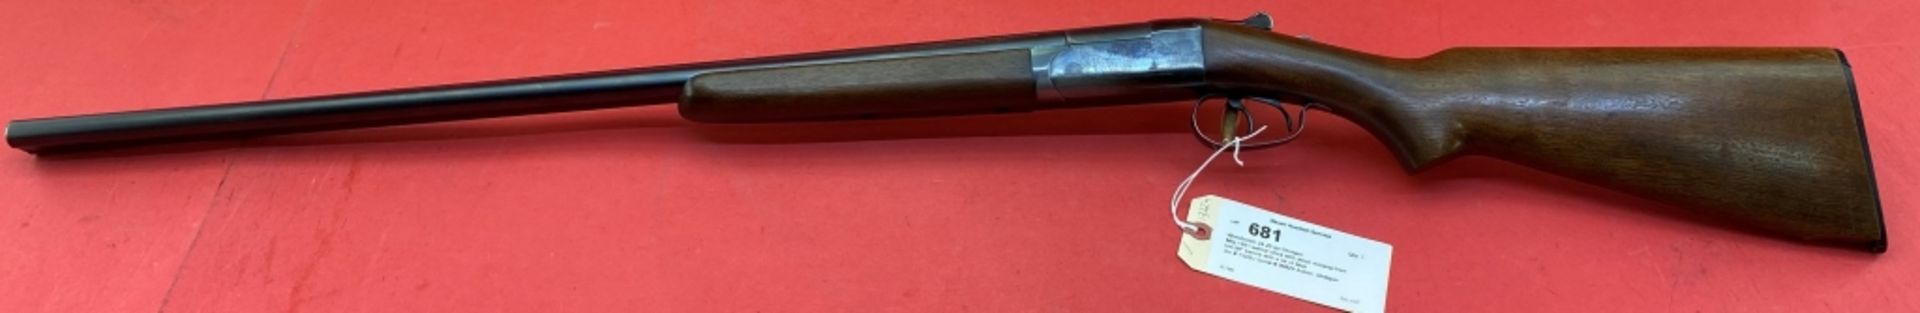 Winchester 24 20 ga Shotgun - Image 12 of 12